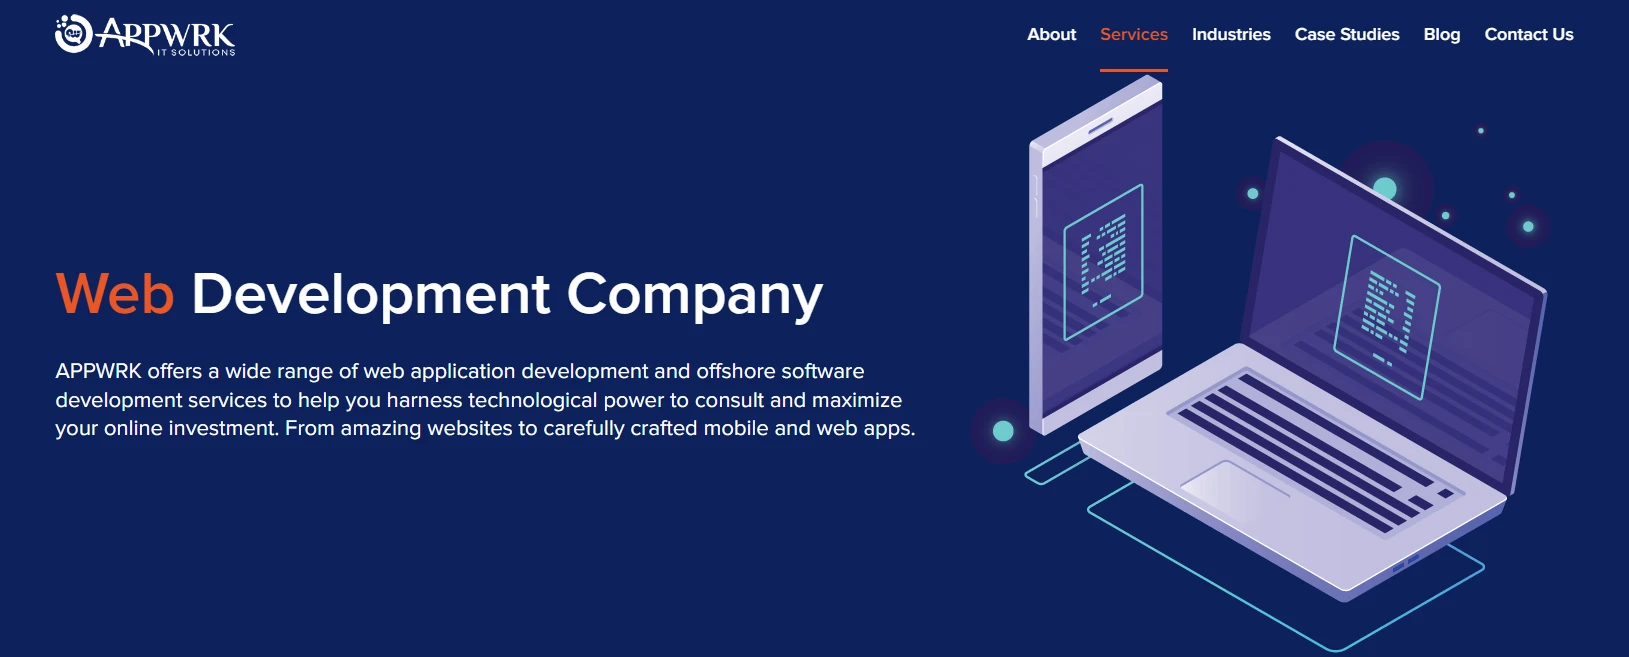 Website Development Company - APPWRK